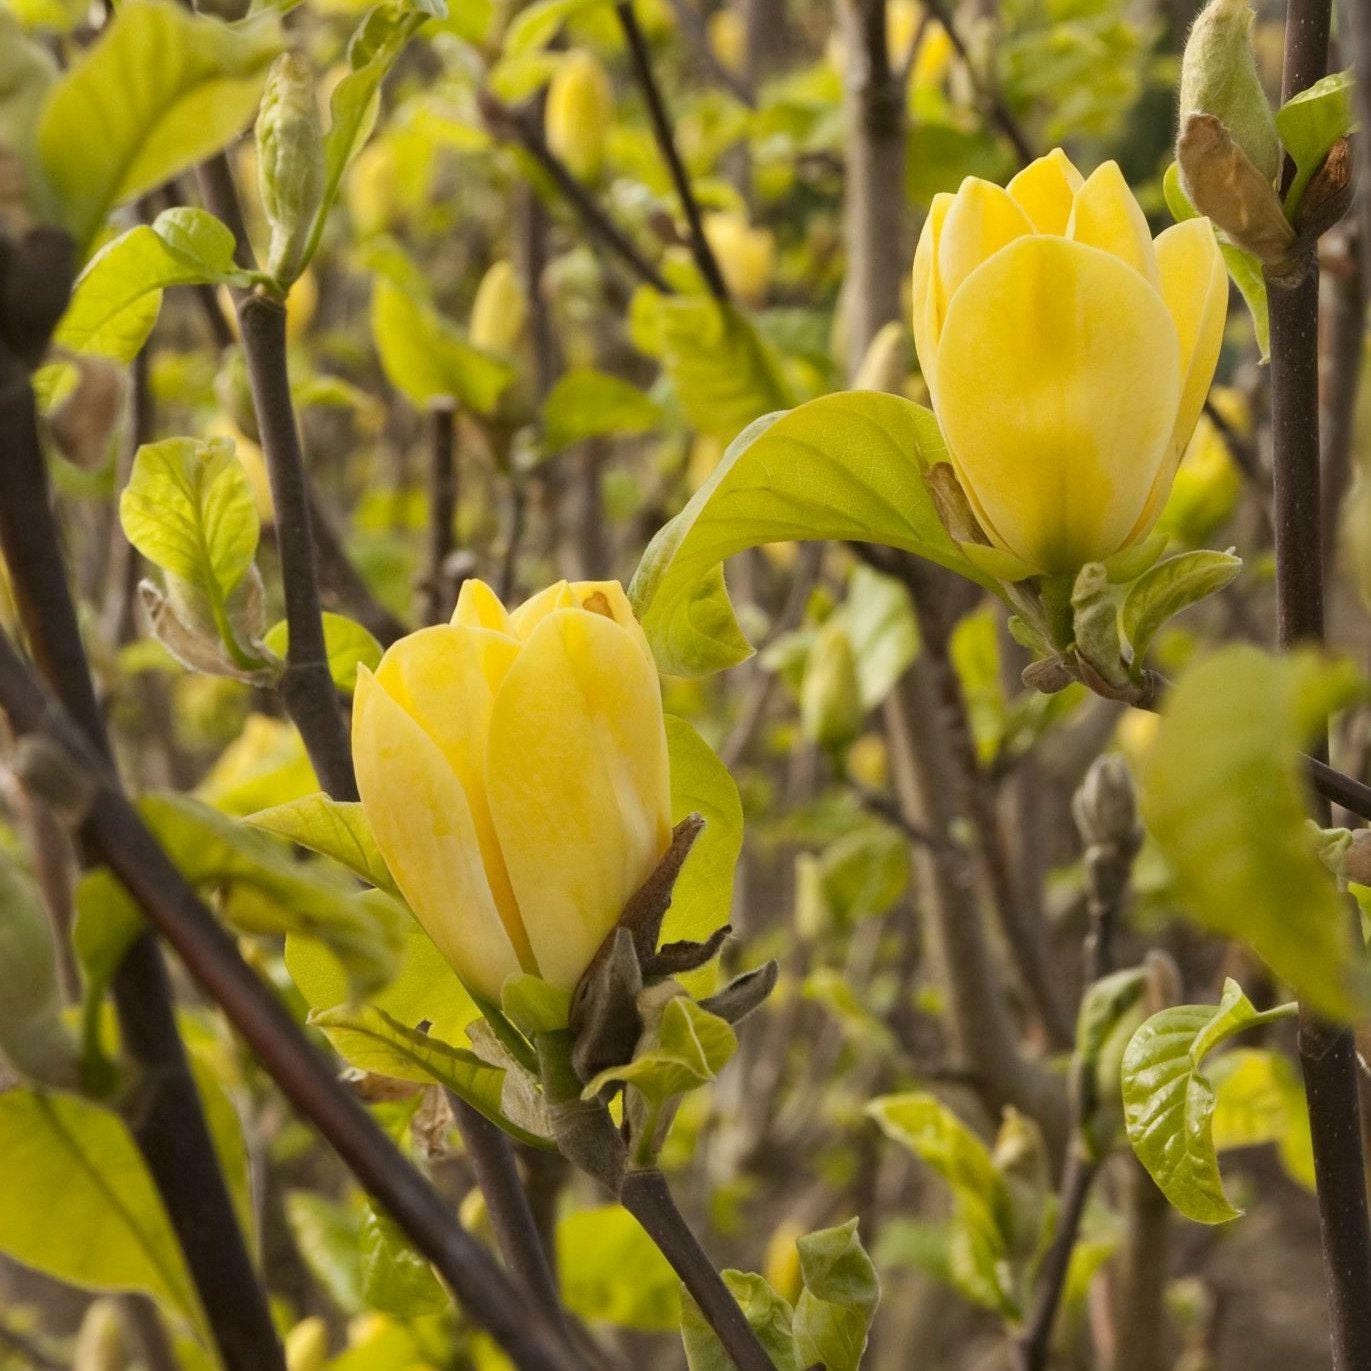 Yellow Bird Magnolia Tree/Shrub - 24-36" Tall Live Plant - 2-3 Foot Tall Seedling - The Nursery Center